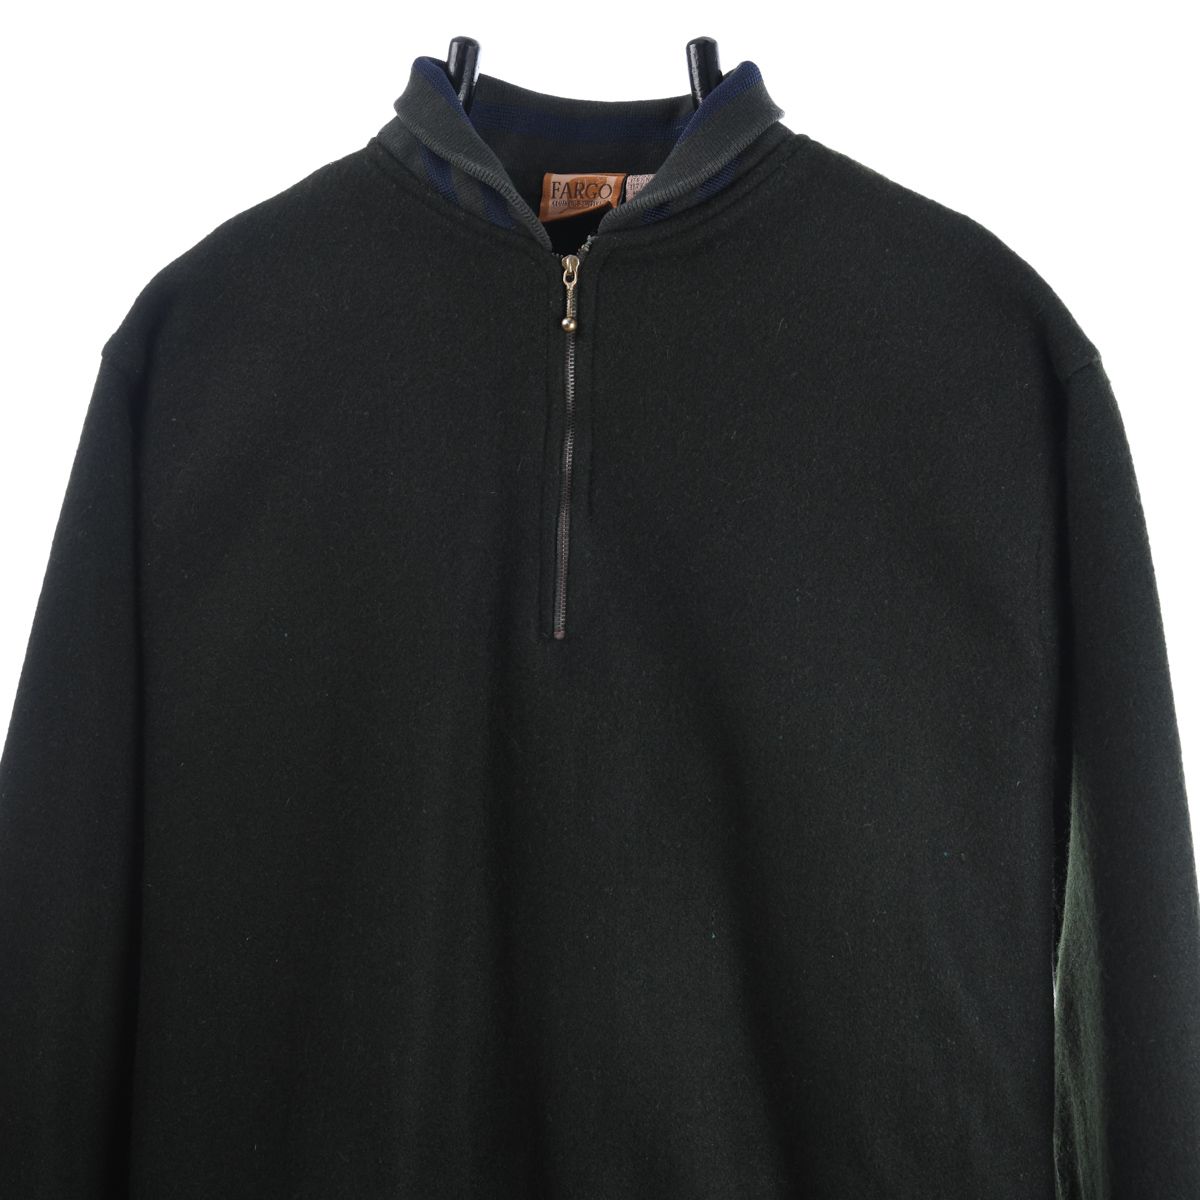 Fargo Clothing Wool Quarter-Zip Pullover